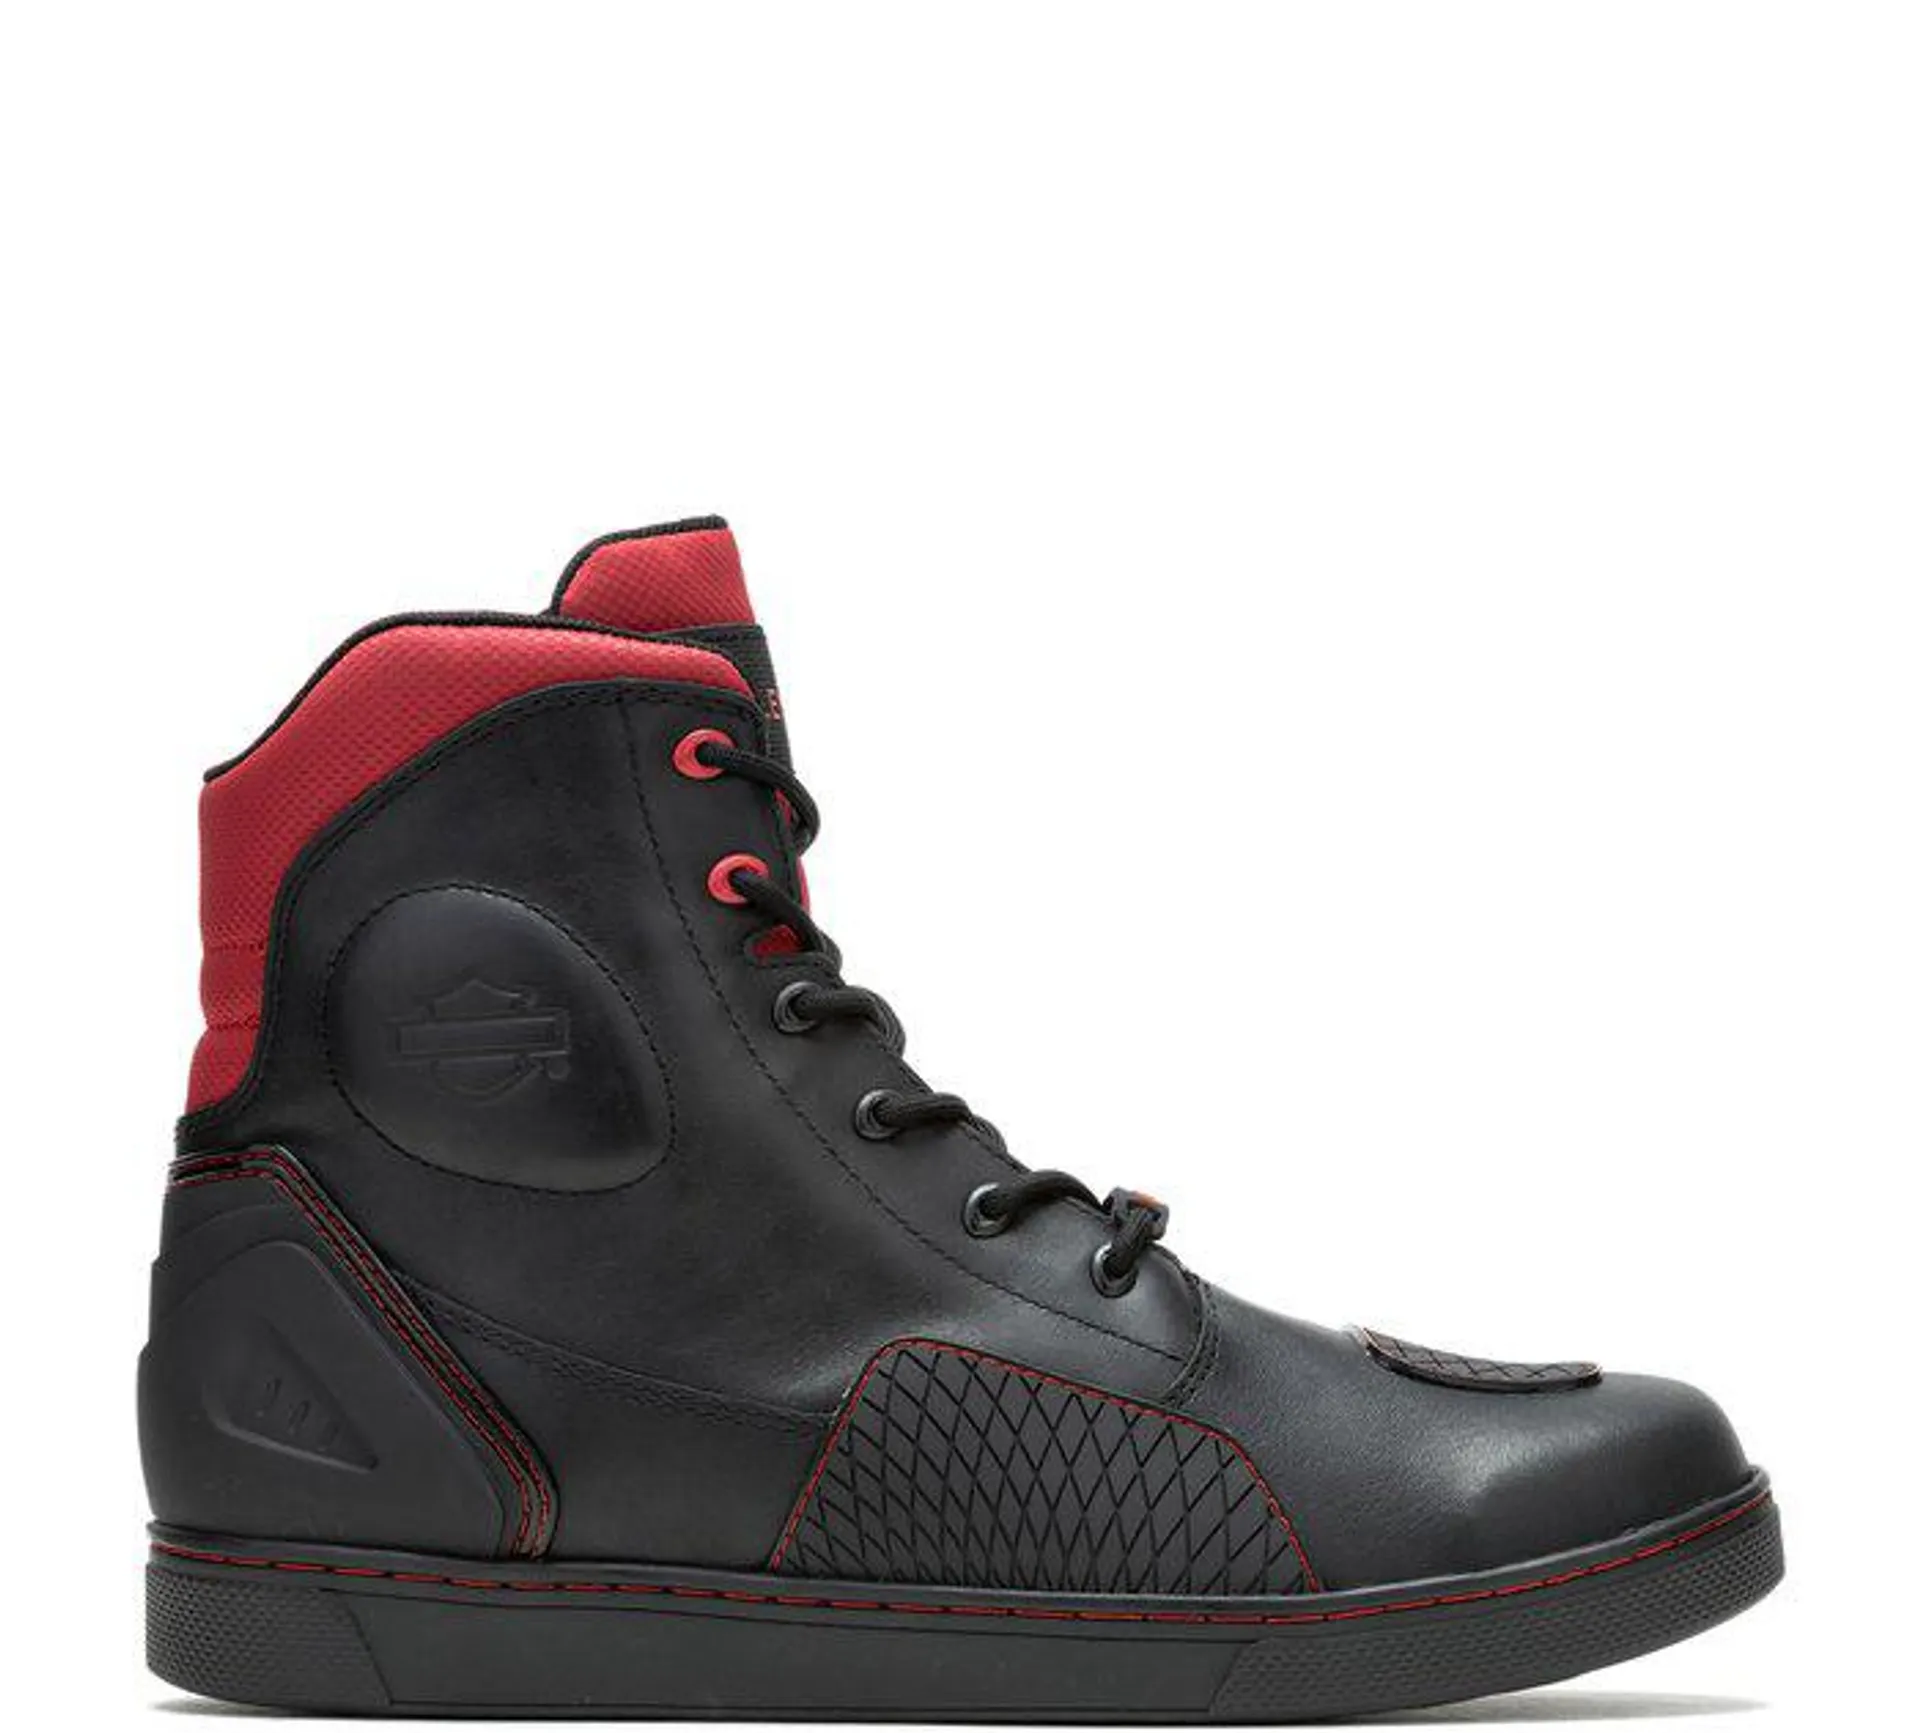 Men's Holtman Riding Sneaker - Black/Red